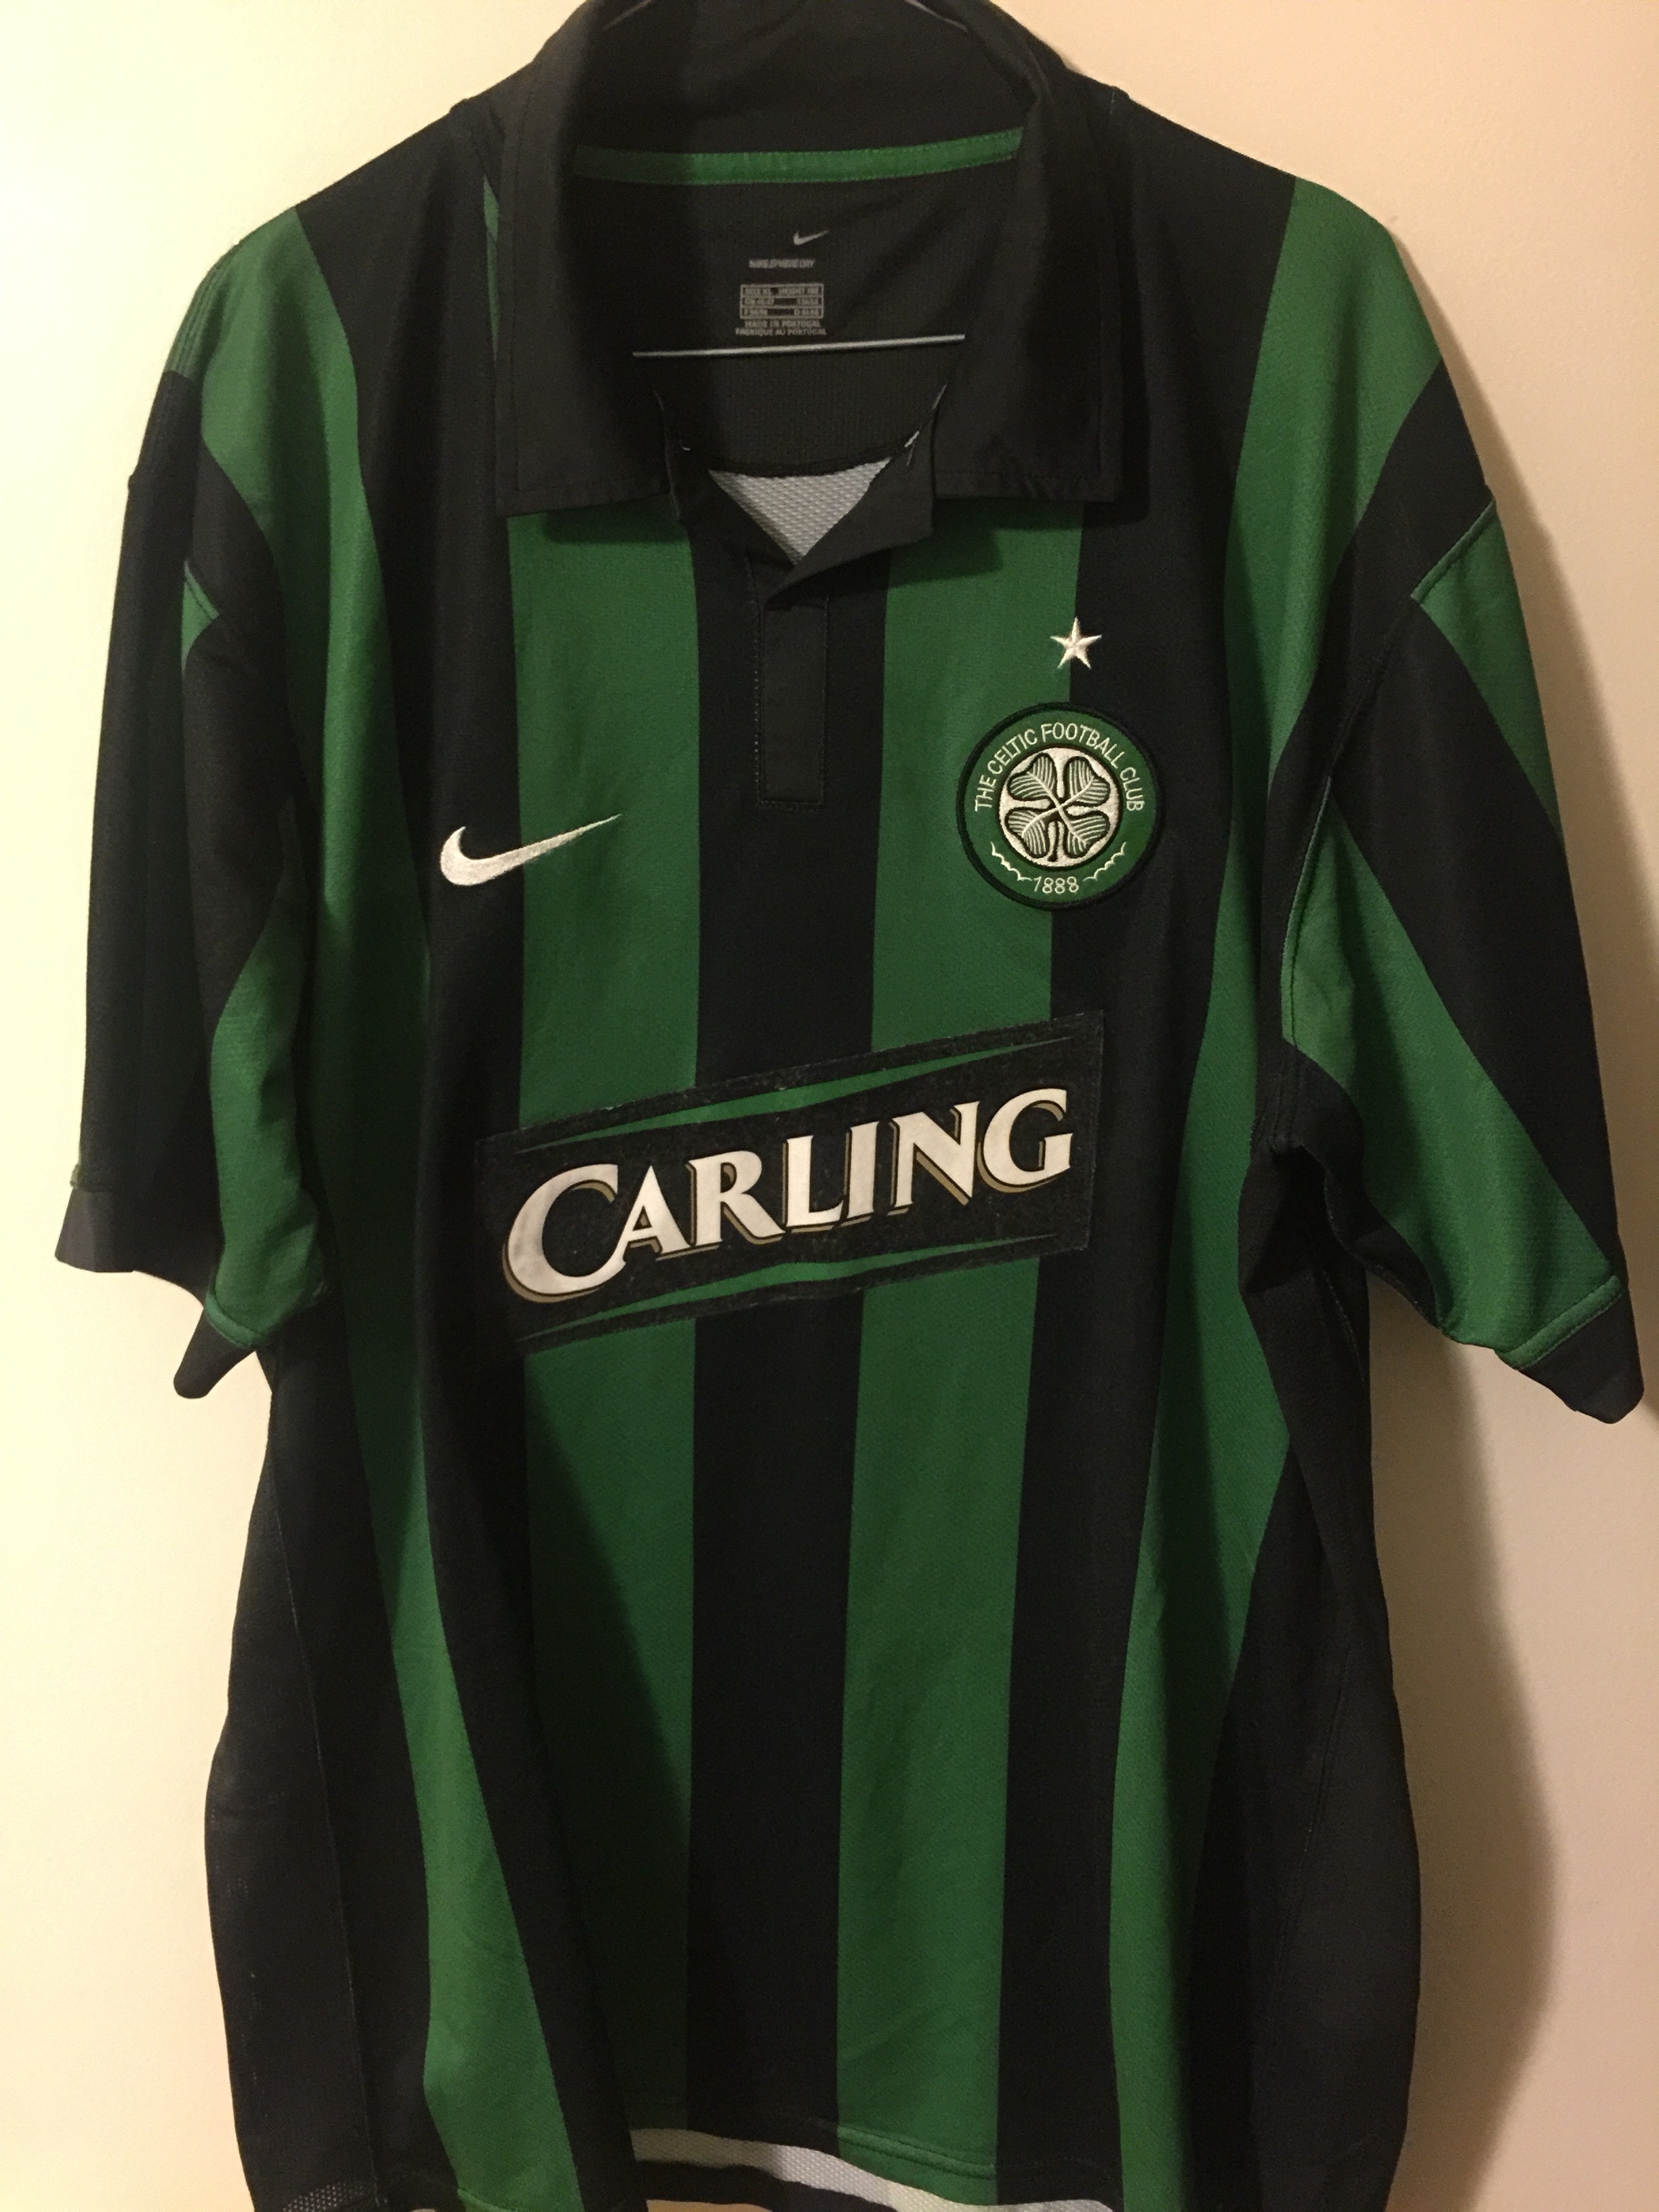 Celtic Cup Shirt football shirt 2006 - 2008. Sponsored by Carling